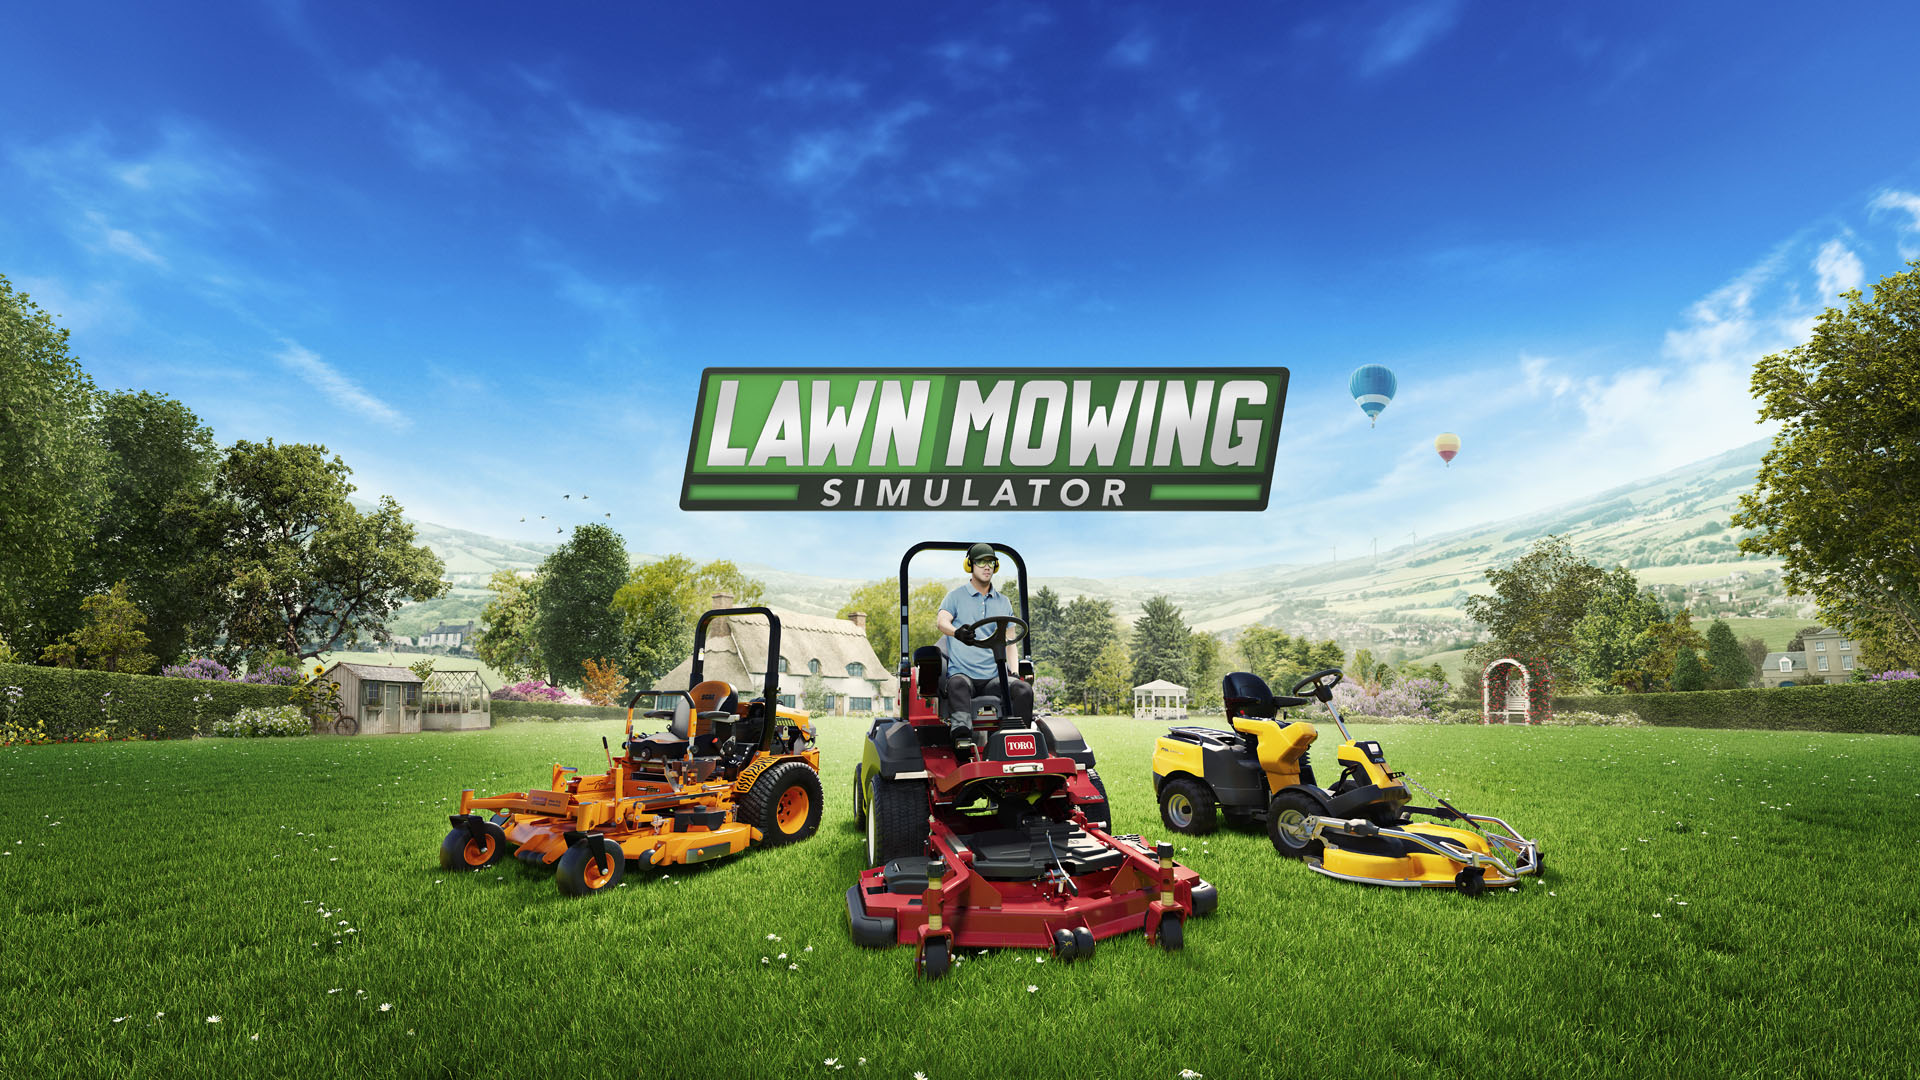 Lawn Mowing Simulator Announced